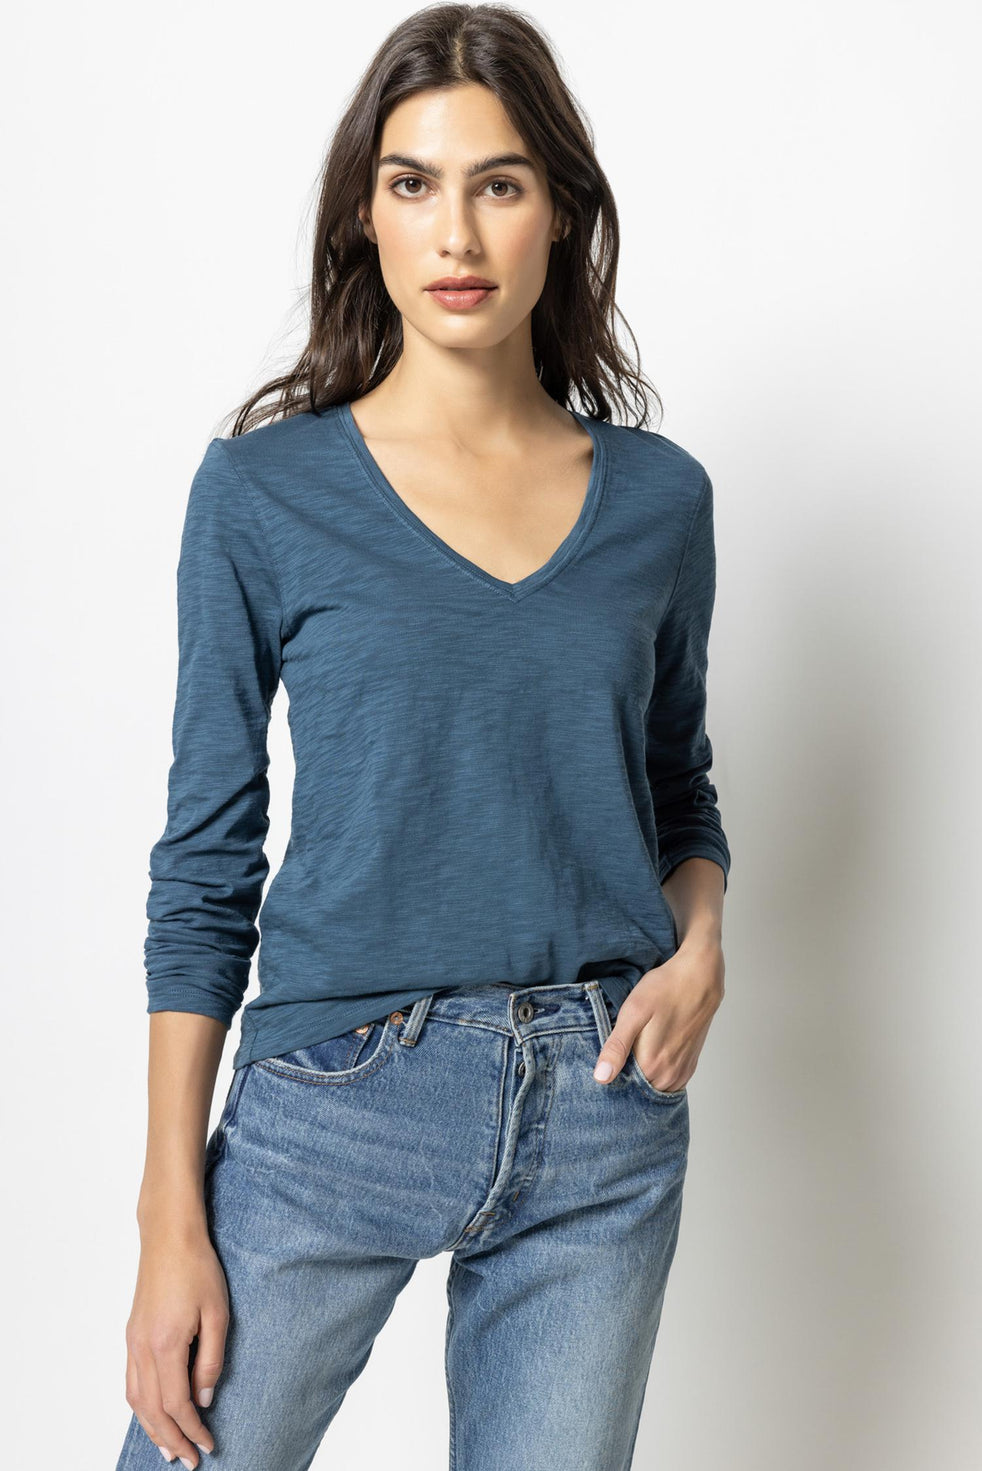 Women's Tops, Tees & Blouses | 100% Cotton Shirts | Classic T Shirts